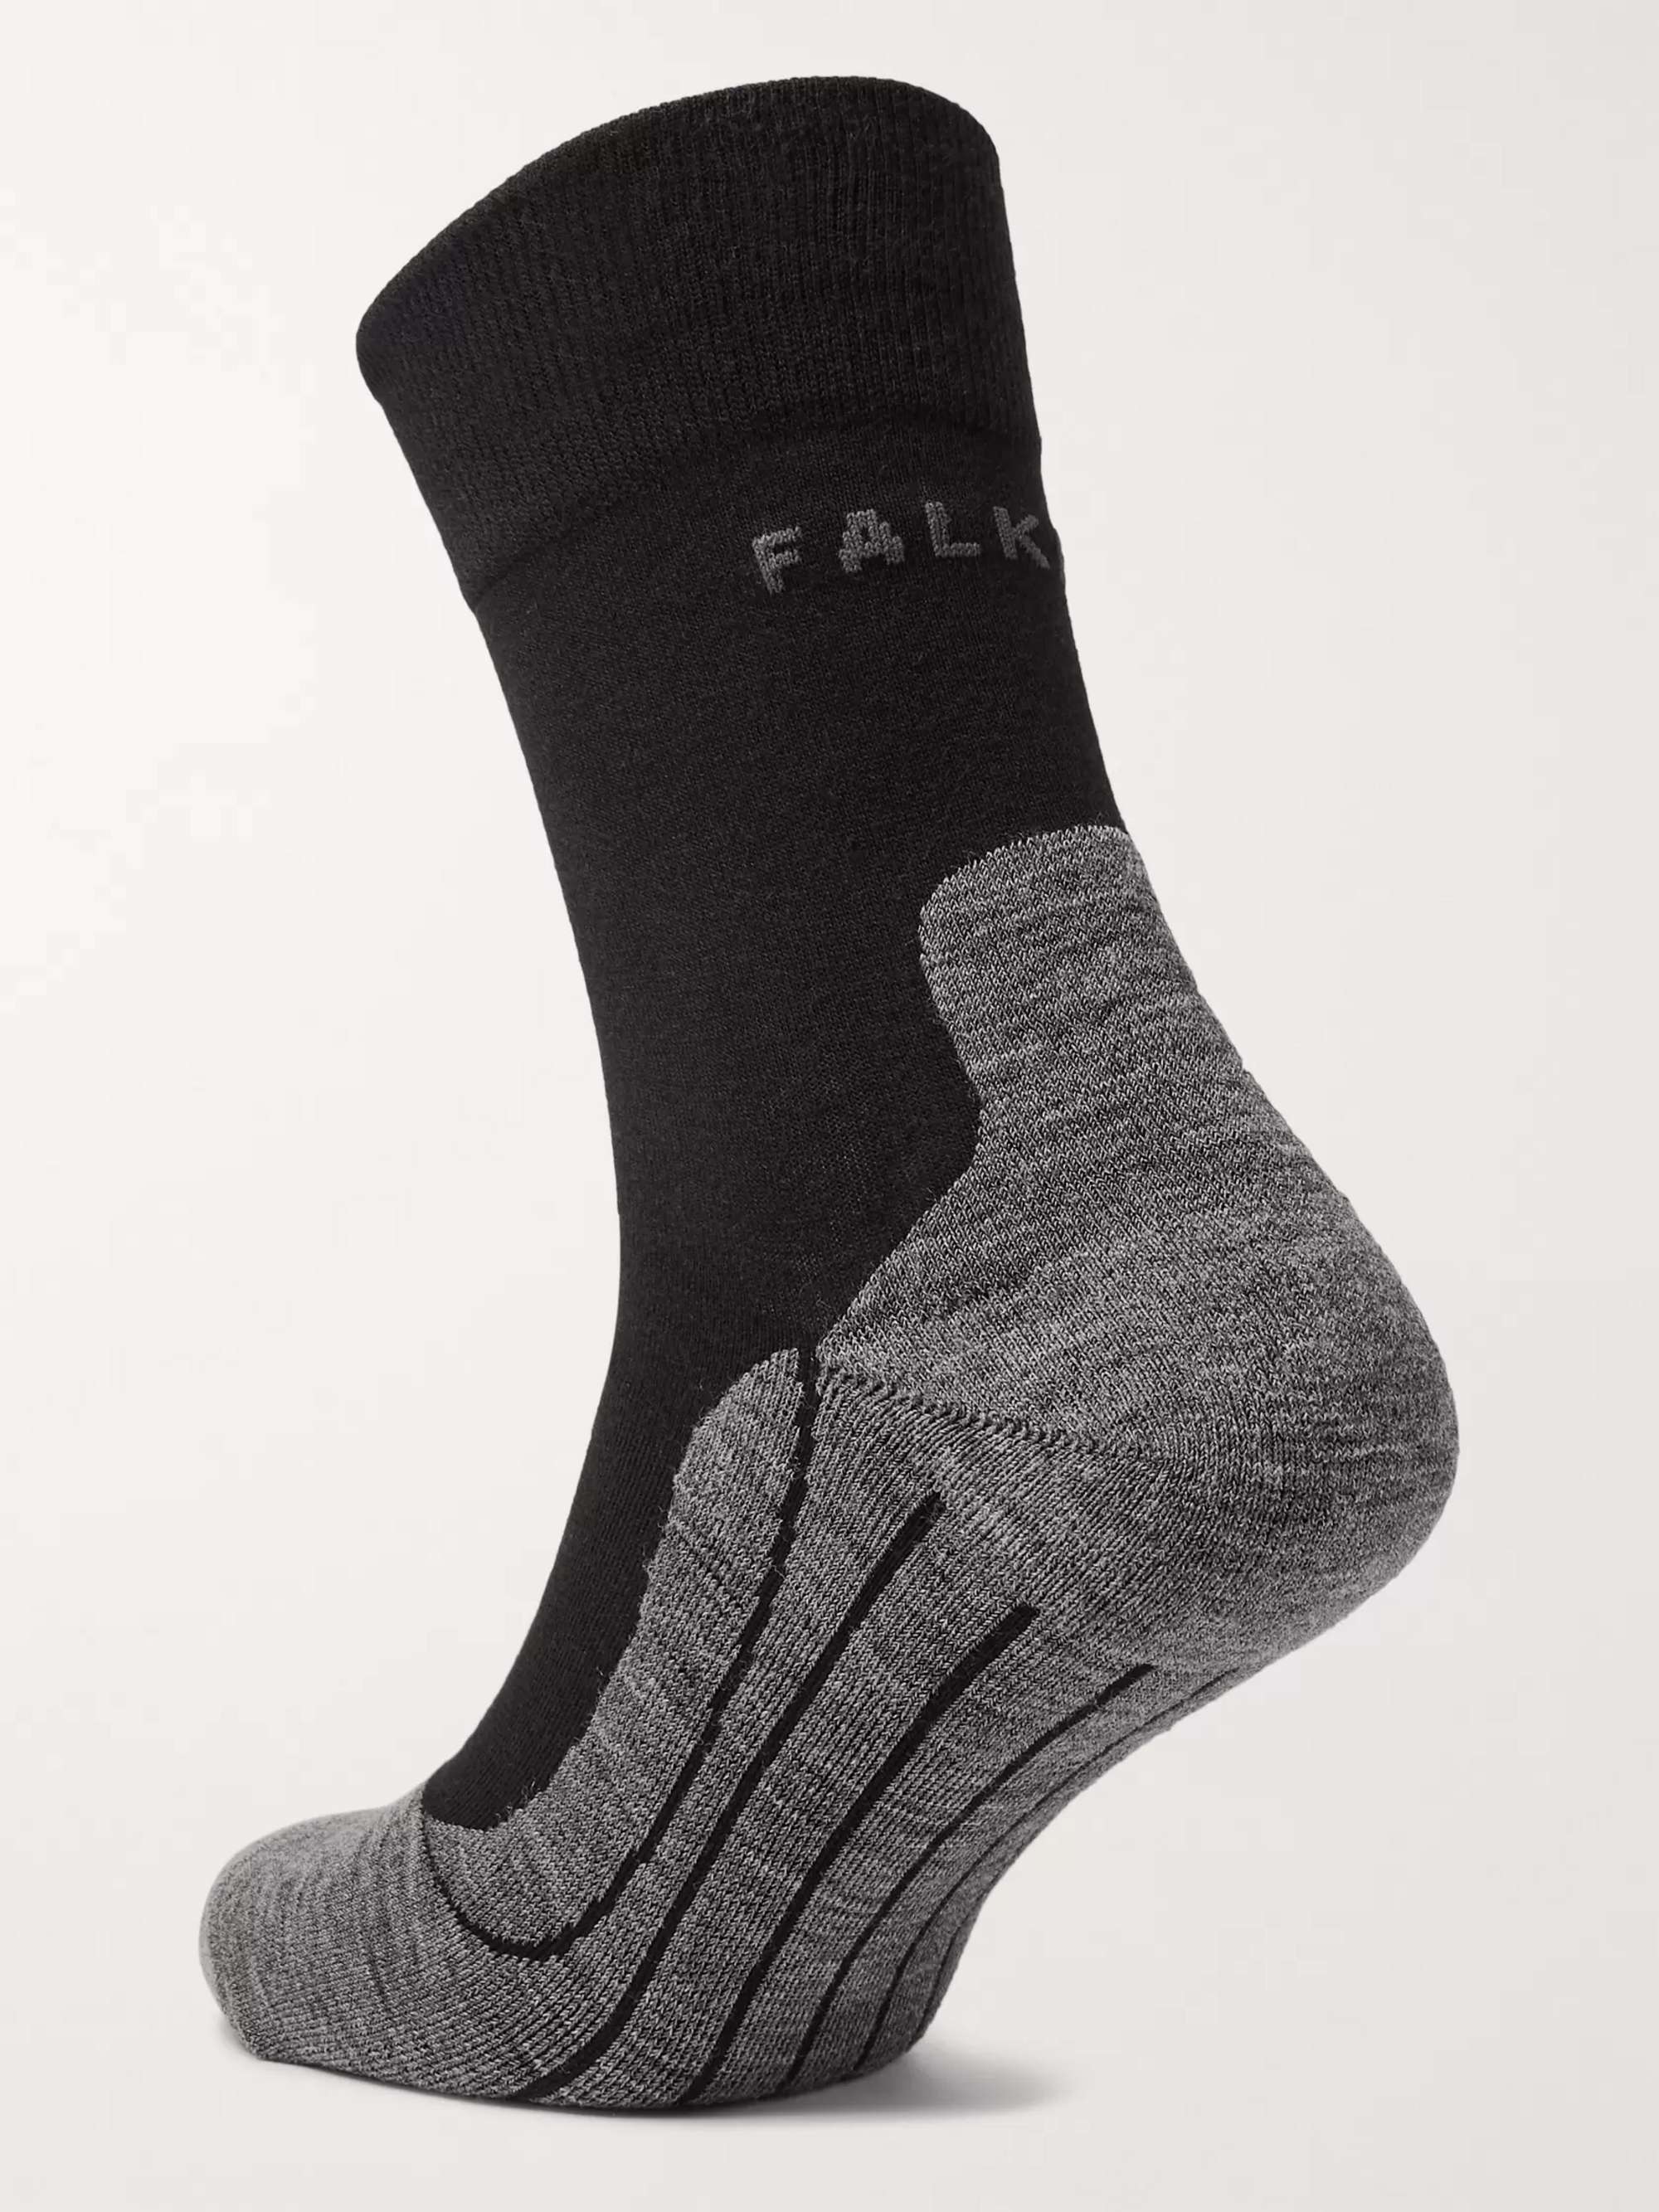 FALKE ERGONOMIC SPORT SYSTEM RU4 Stretch-Knit Socks